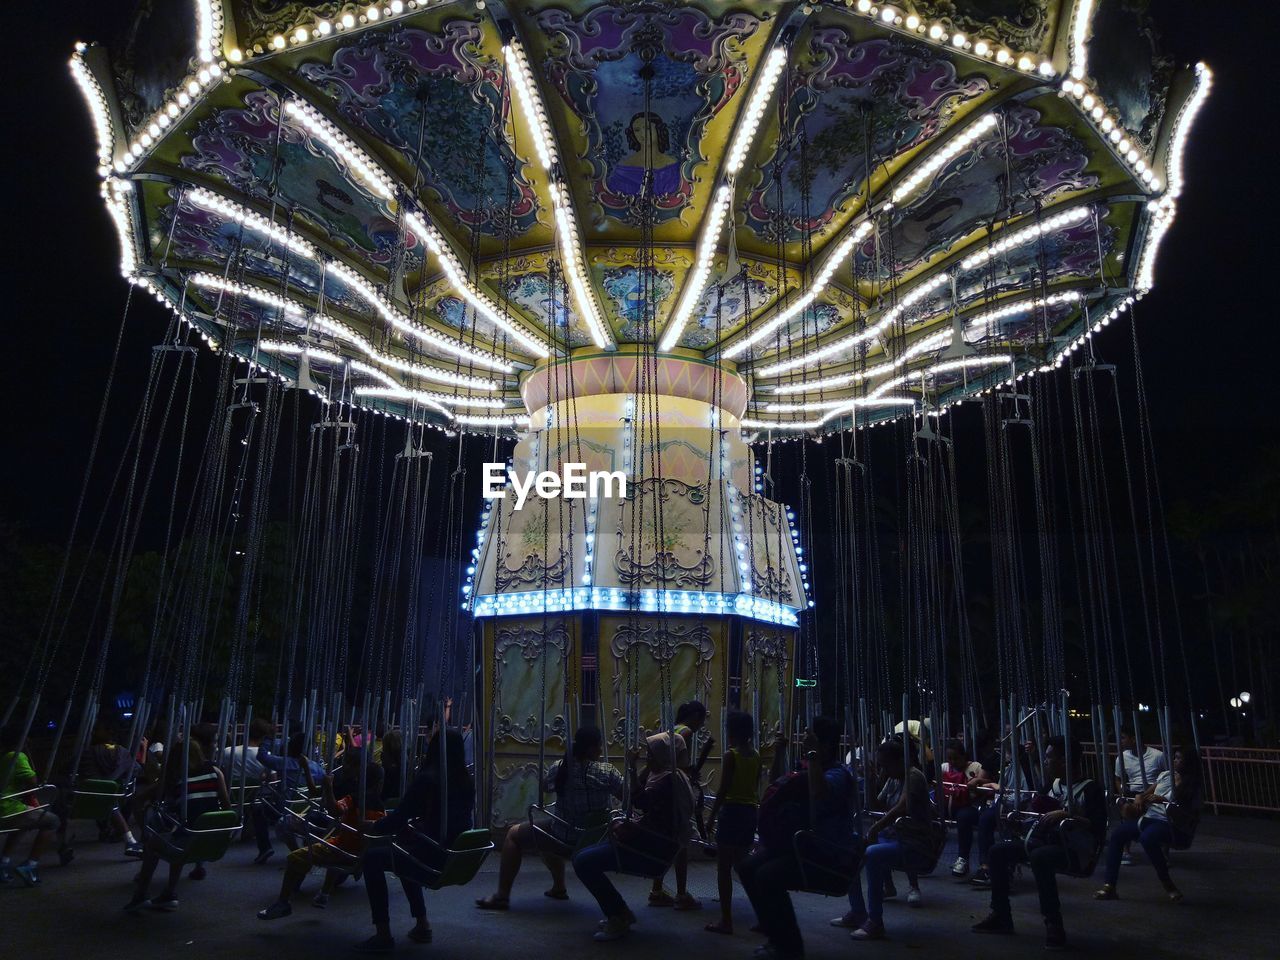 Illuminated chain swing ride in amusement park at night